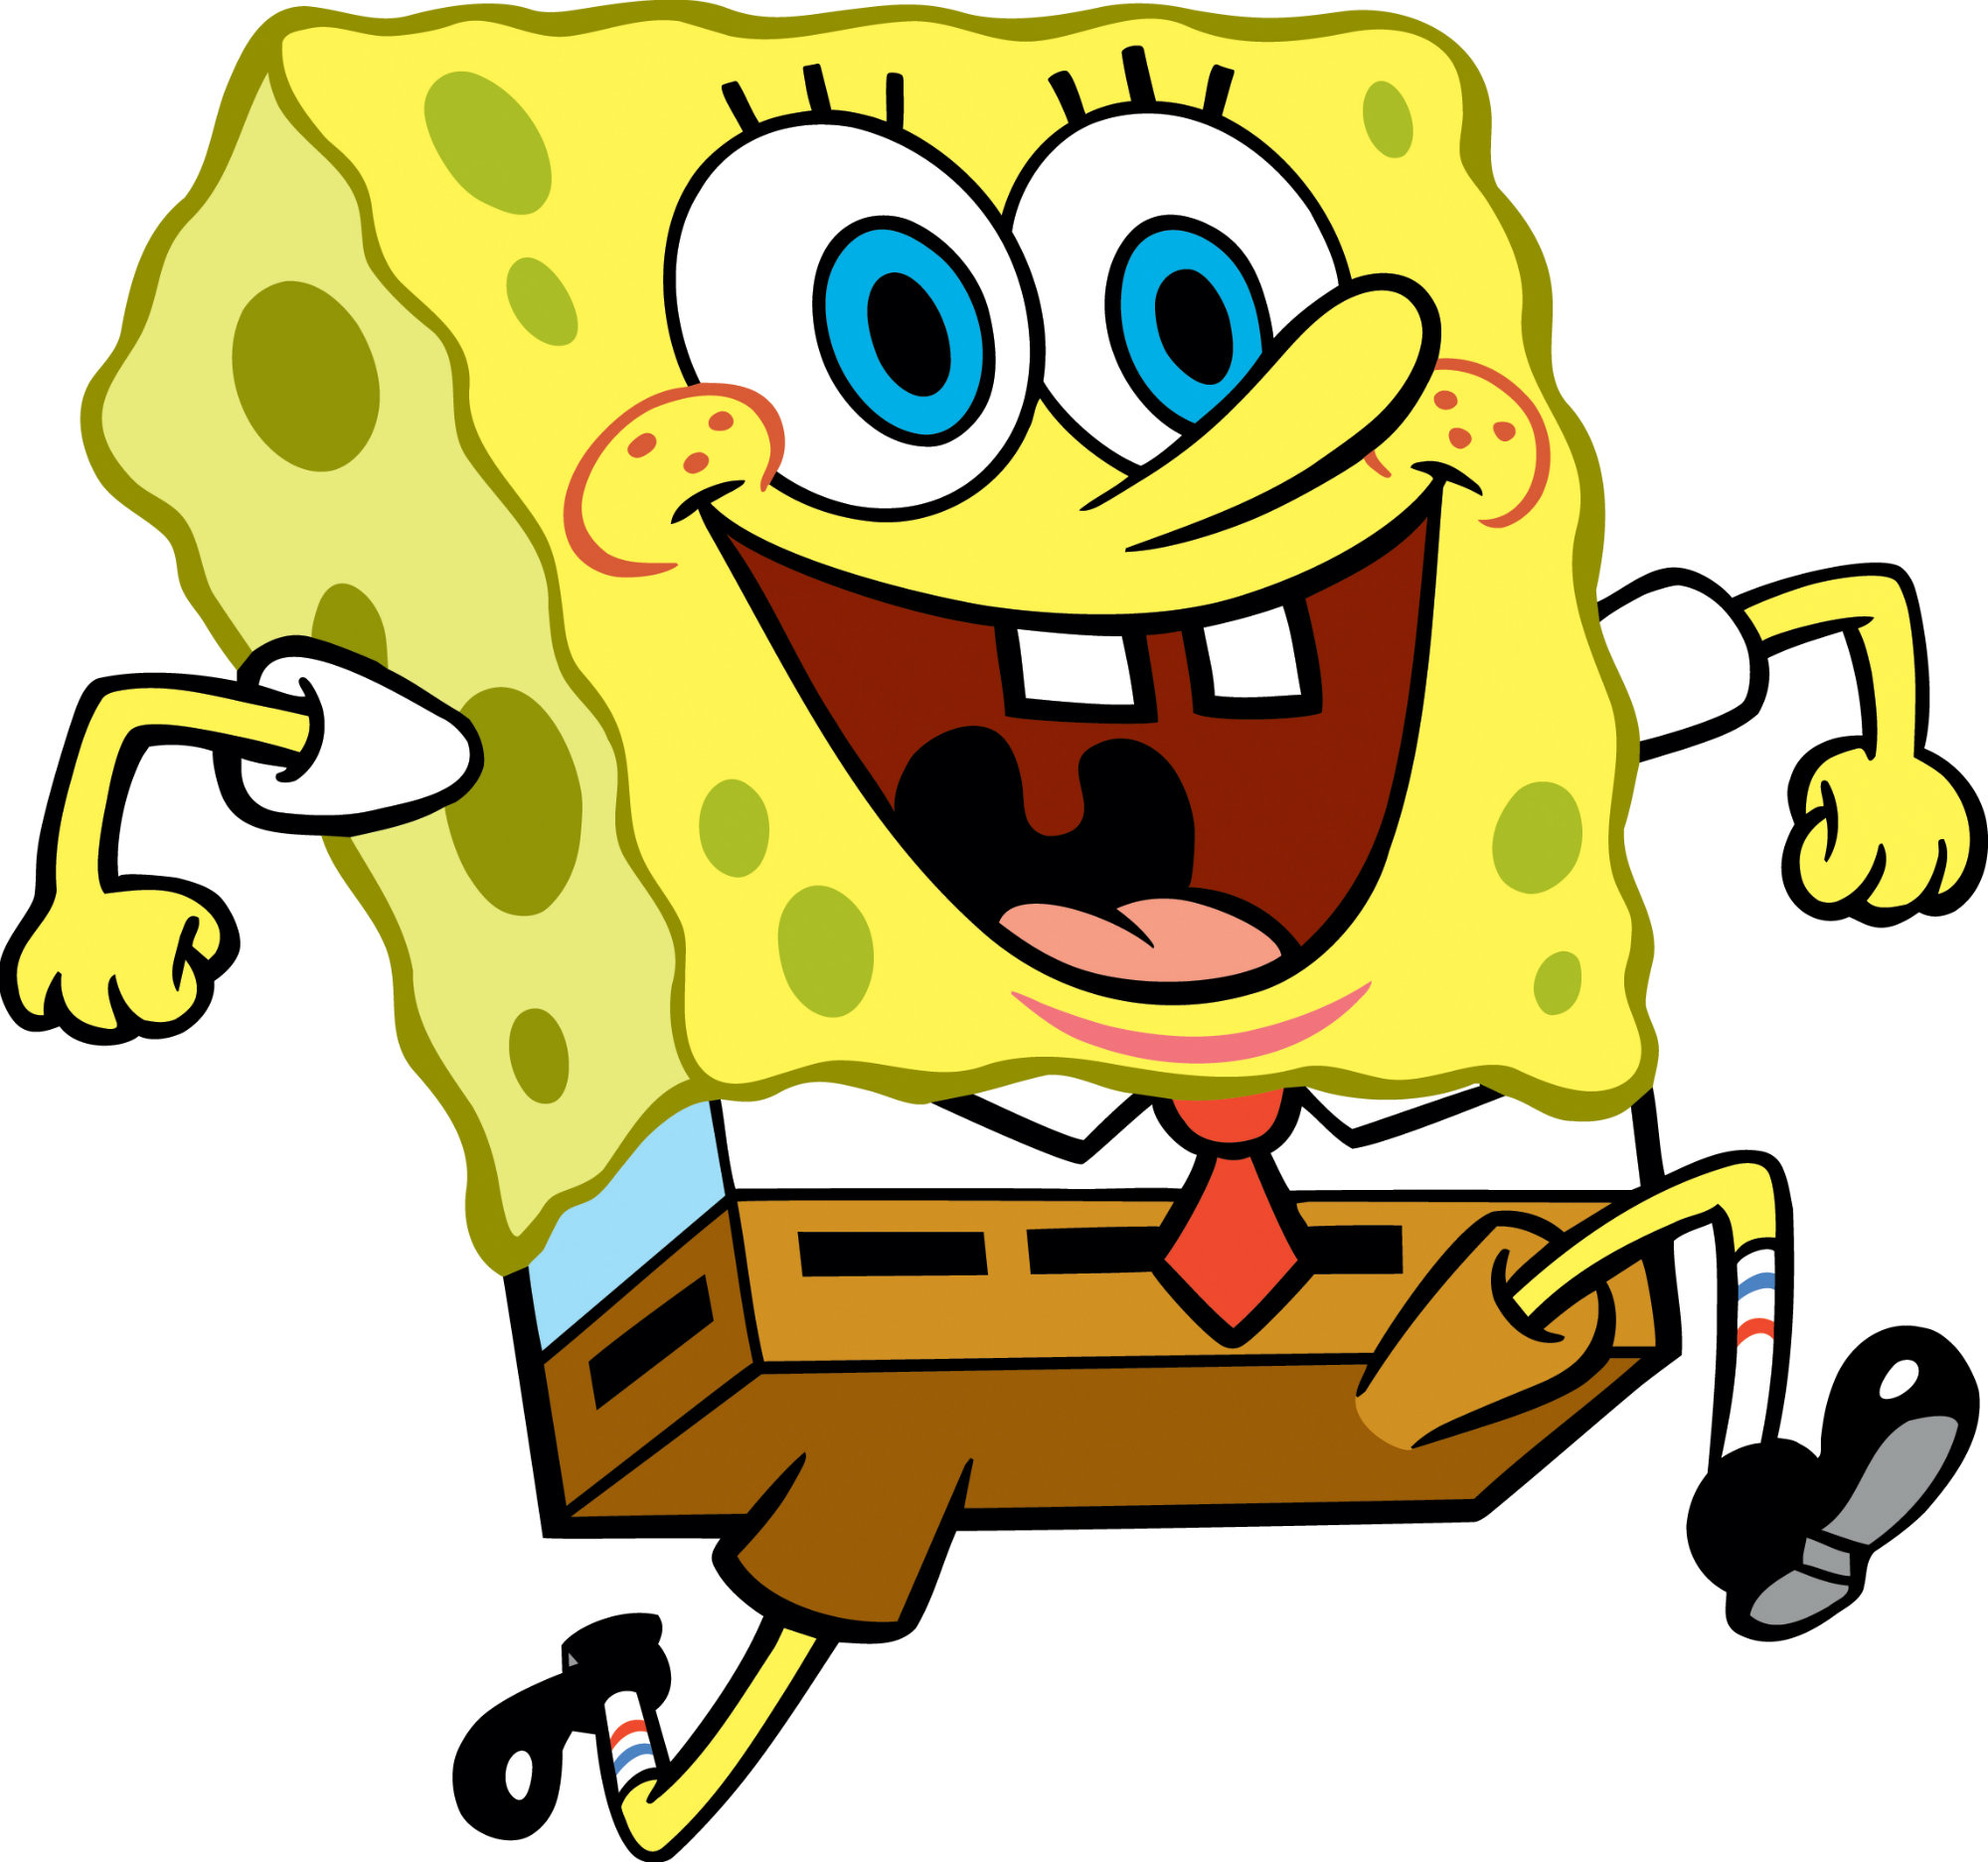 Spongebob Squarepants #8